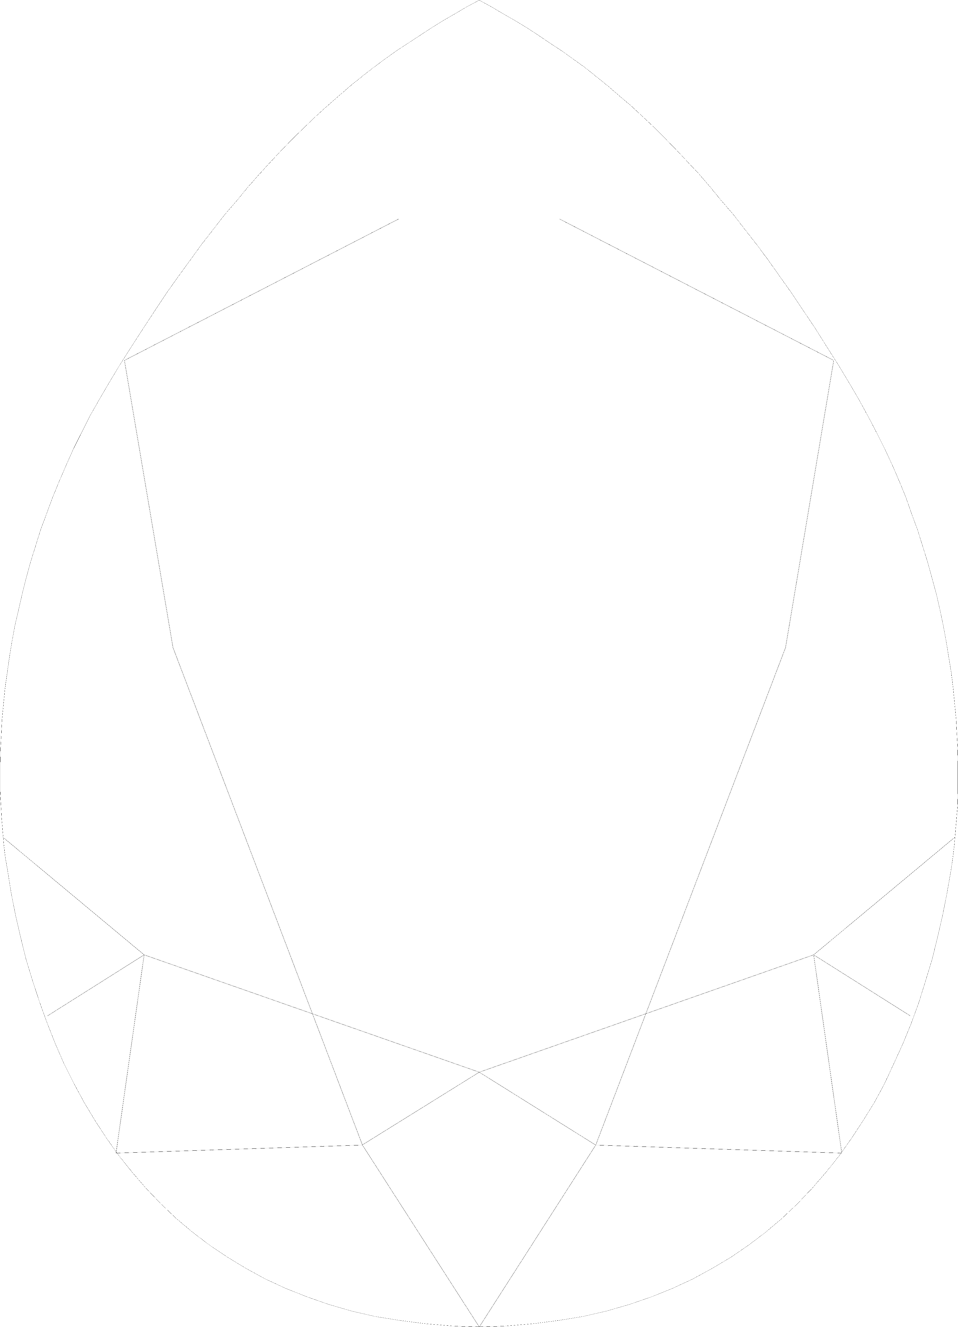 Gem   Free Stock Photo   Illustration Of An Egg Shaped Gem     8328